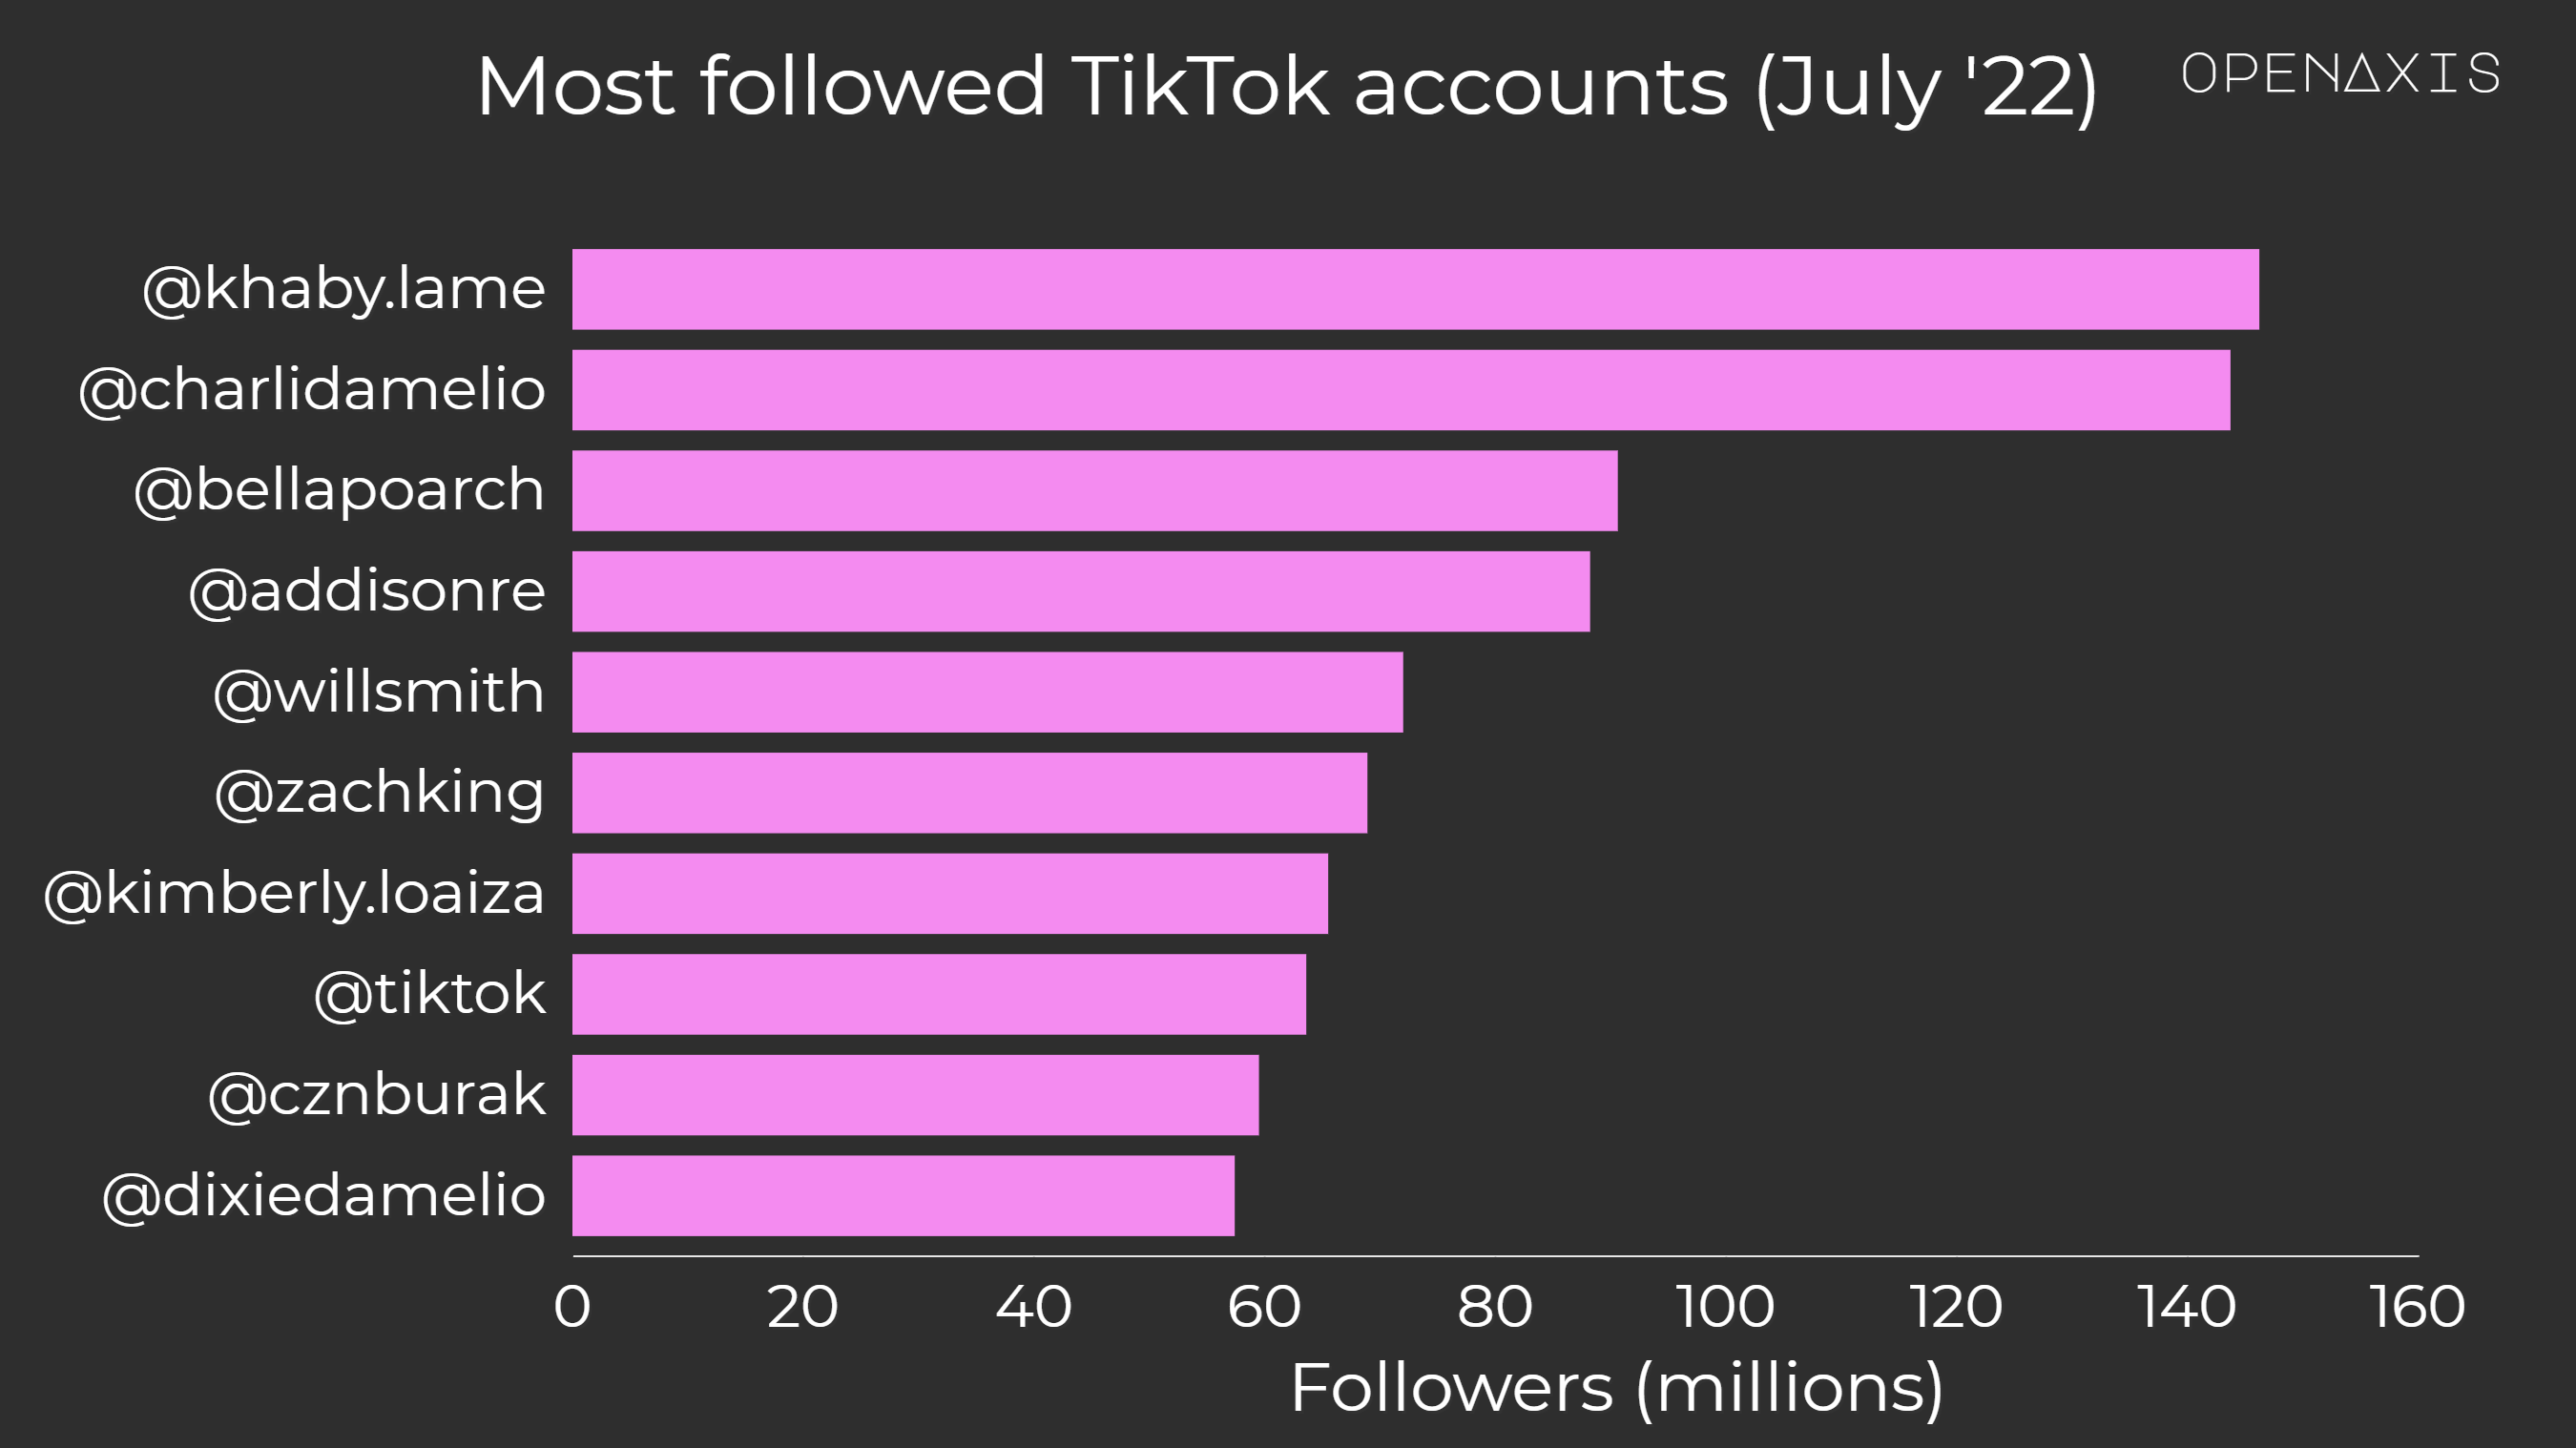 "Most followed TikTok accounts (July '22)"